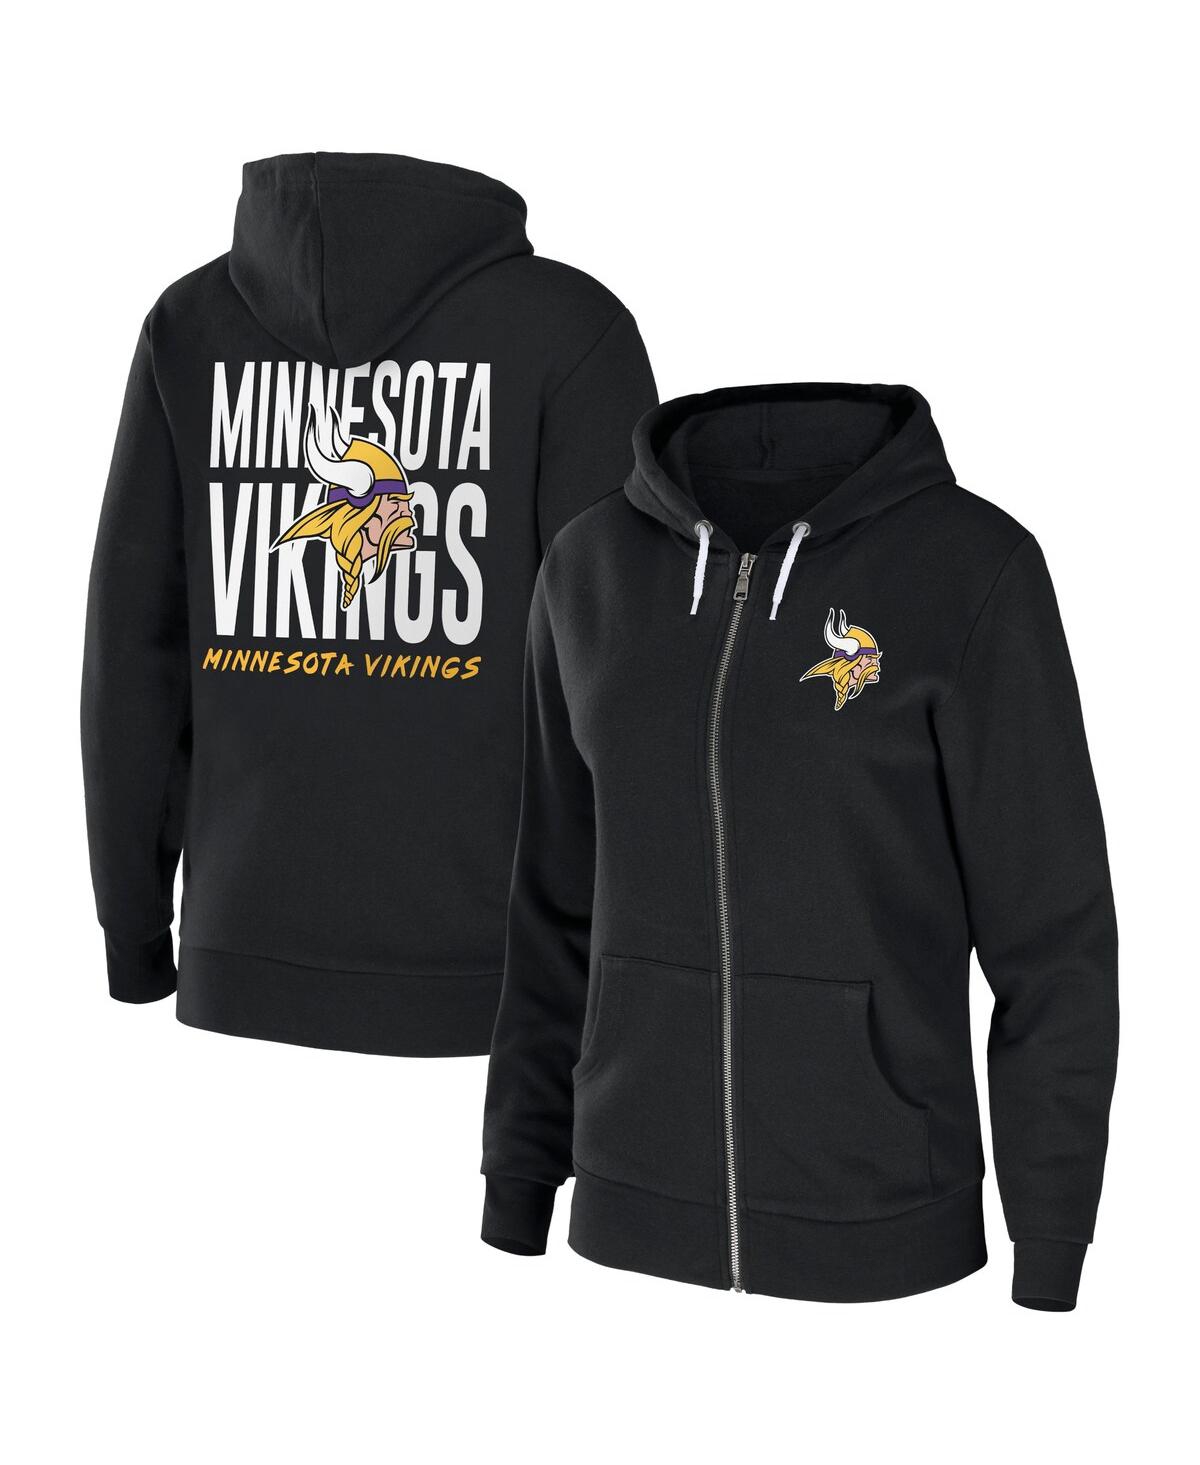 Wear By Erin Andrews Women's  Black Minnesota Vikings Sponge Fleece Full-zip Hoodie